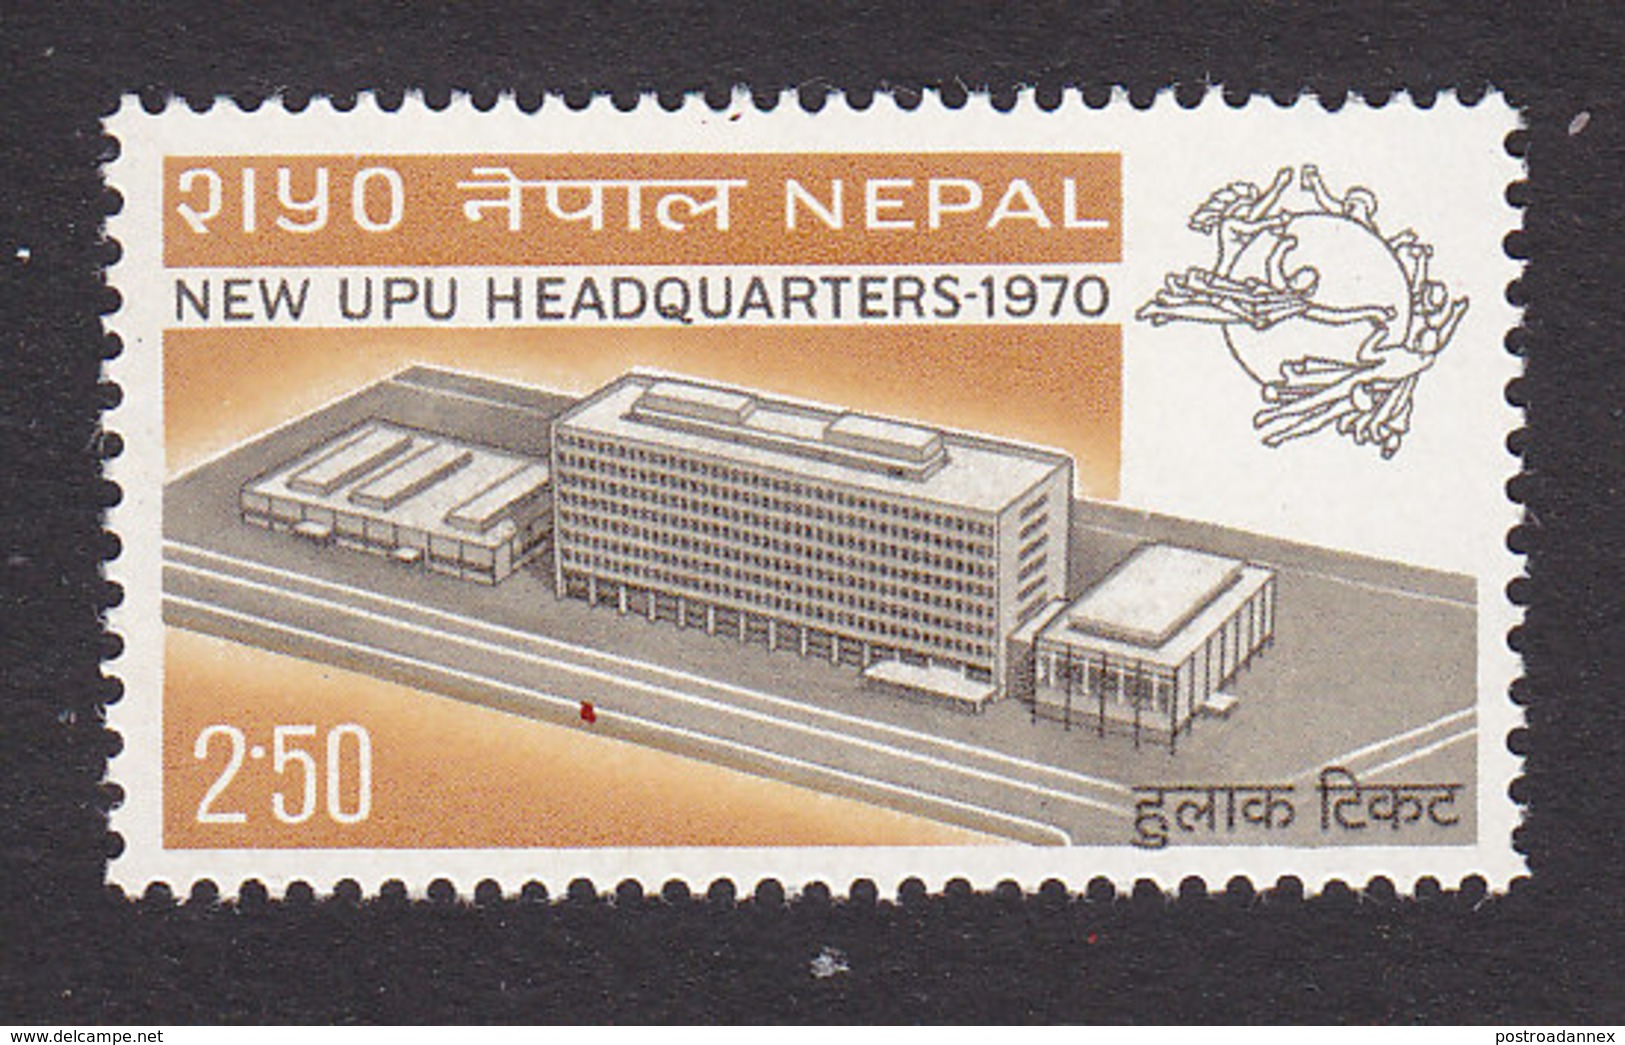 Nepal, Scott #230, Mint Hinged, New UPU Headquarters, Issued 1970 - Nepal